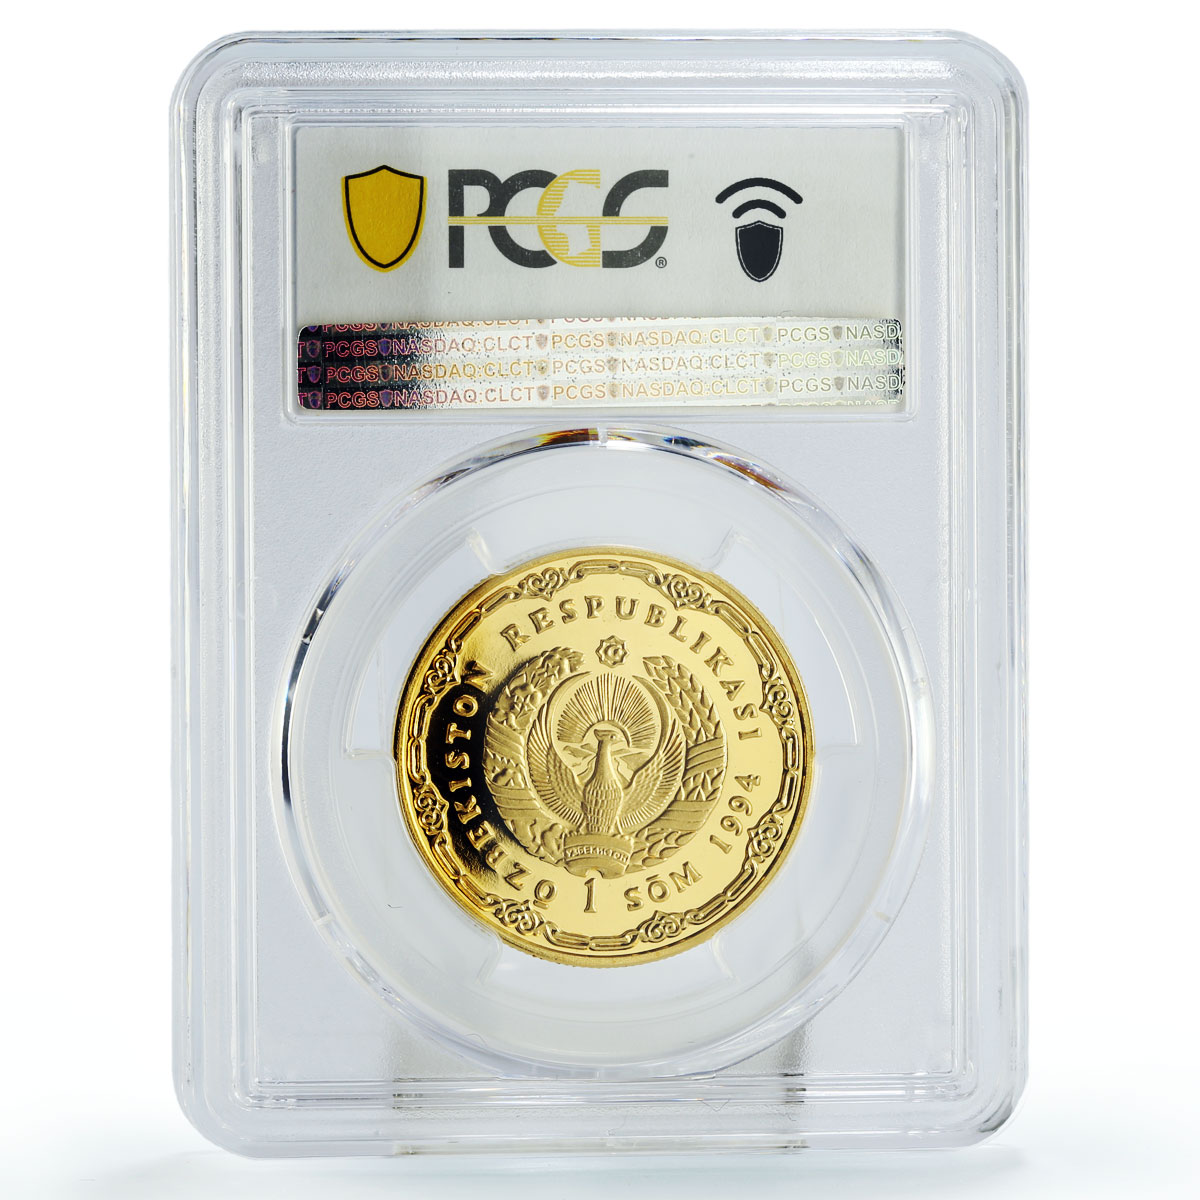 Uzbekistan 1 som Muhammad Taragay Ulugbek PR69 PCGS Probe gilded brass coin 1994